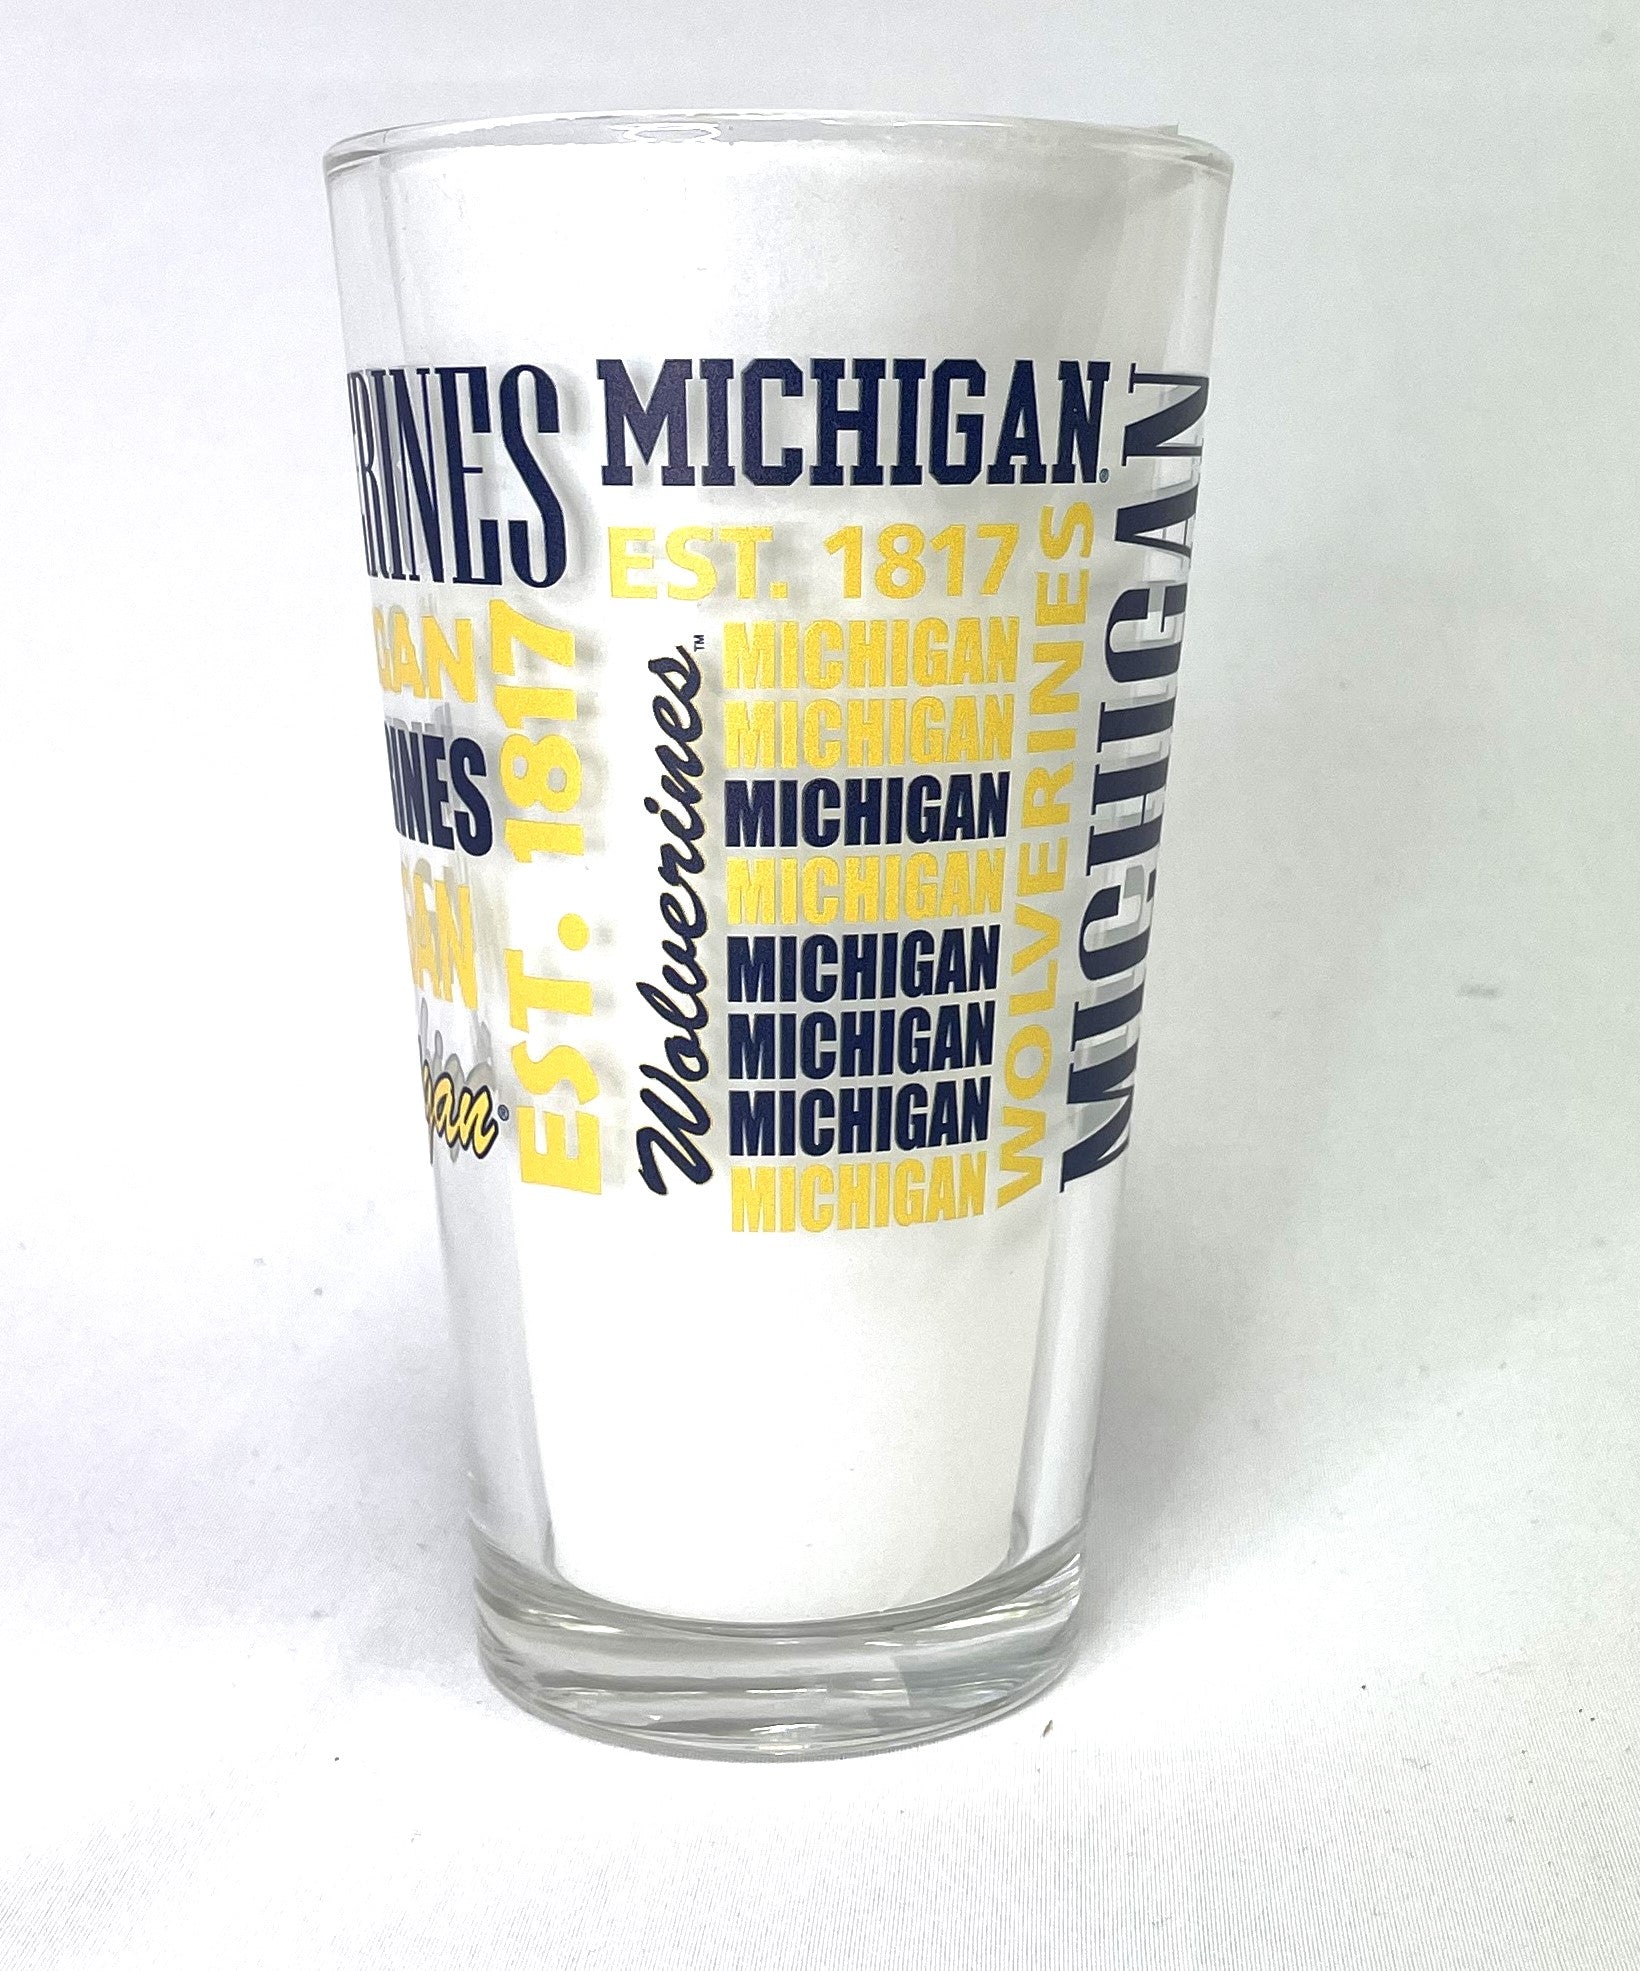 Michigan Wolverines Spirit Pint